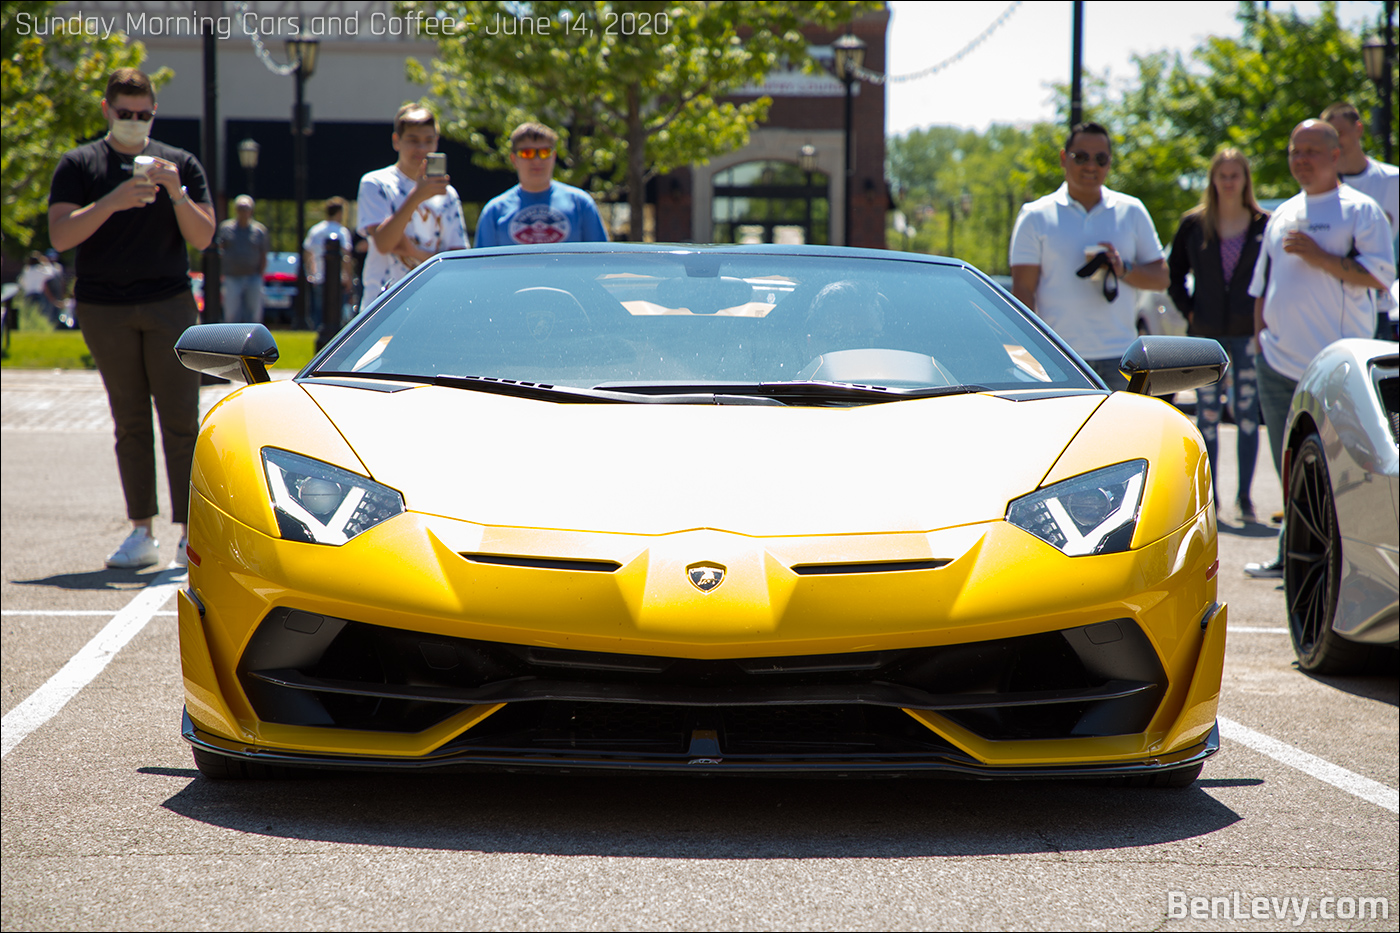 Yellow Lamborghini Aventador at Sunday Morning Cars and Coffee